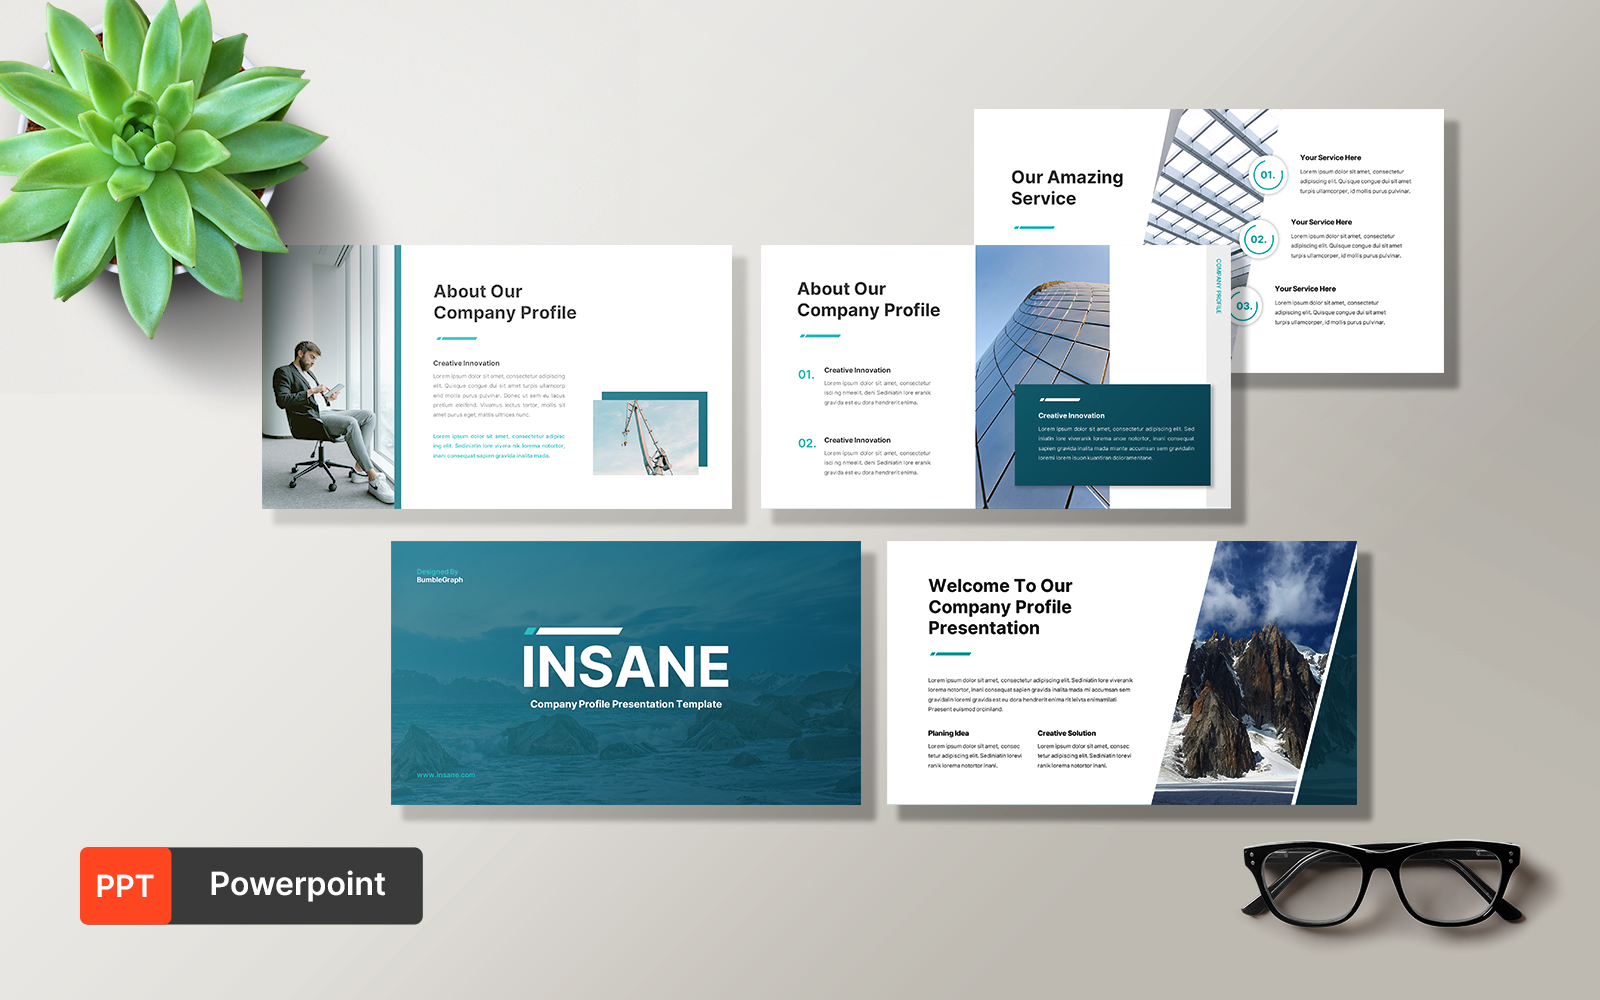 Insane Company Profile Powerpoint